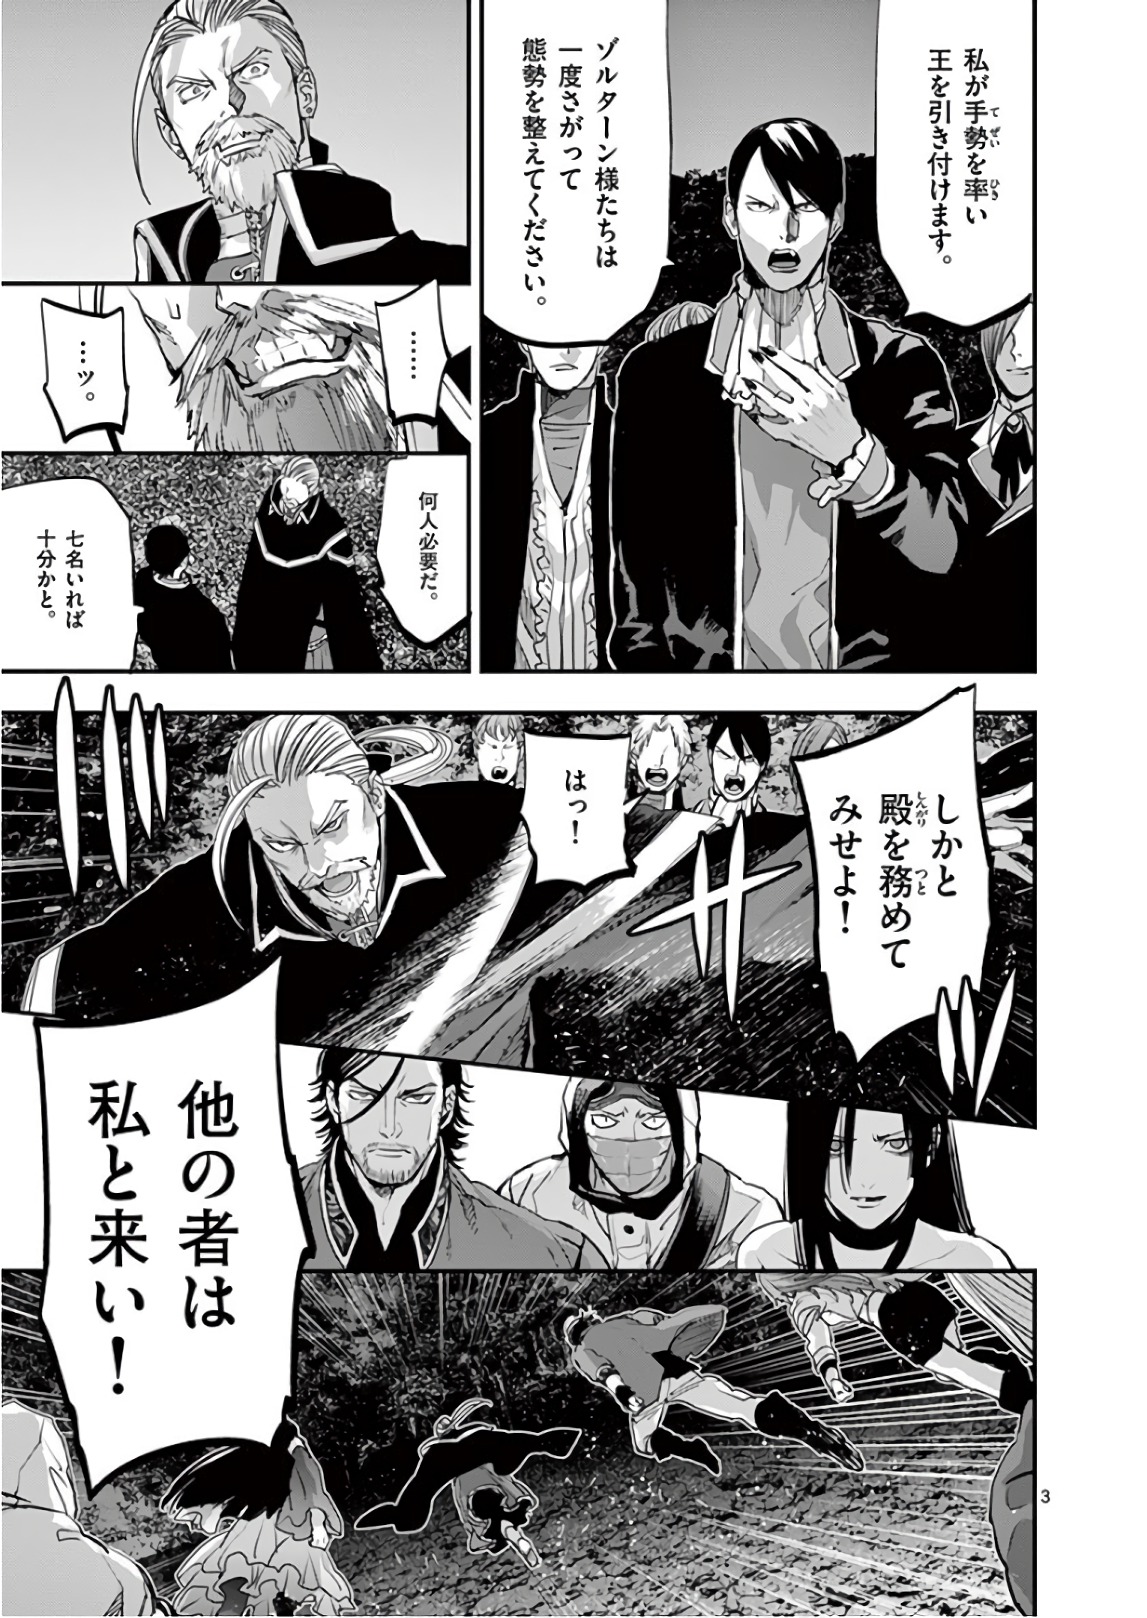 Ginrou Bloodborne - Chapter 78 - Page 3